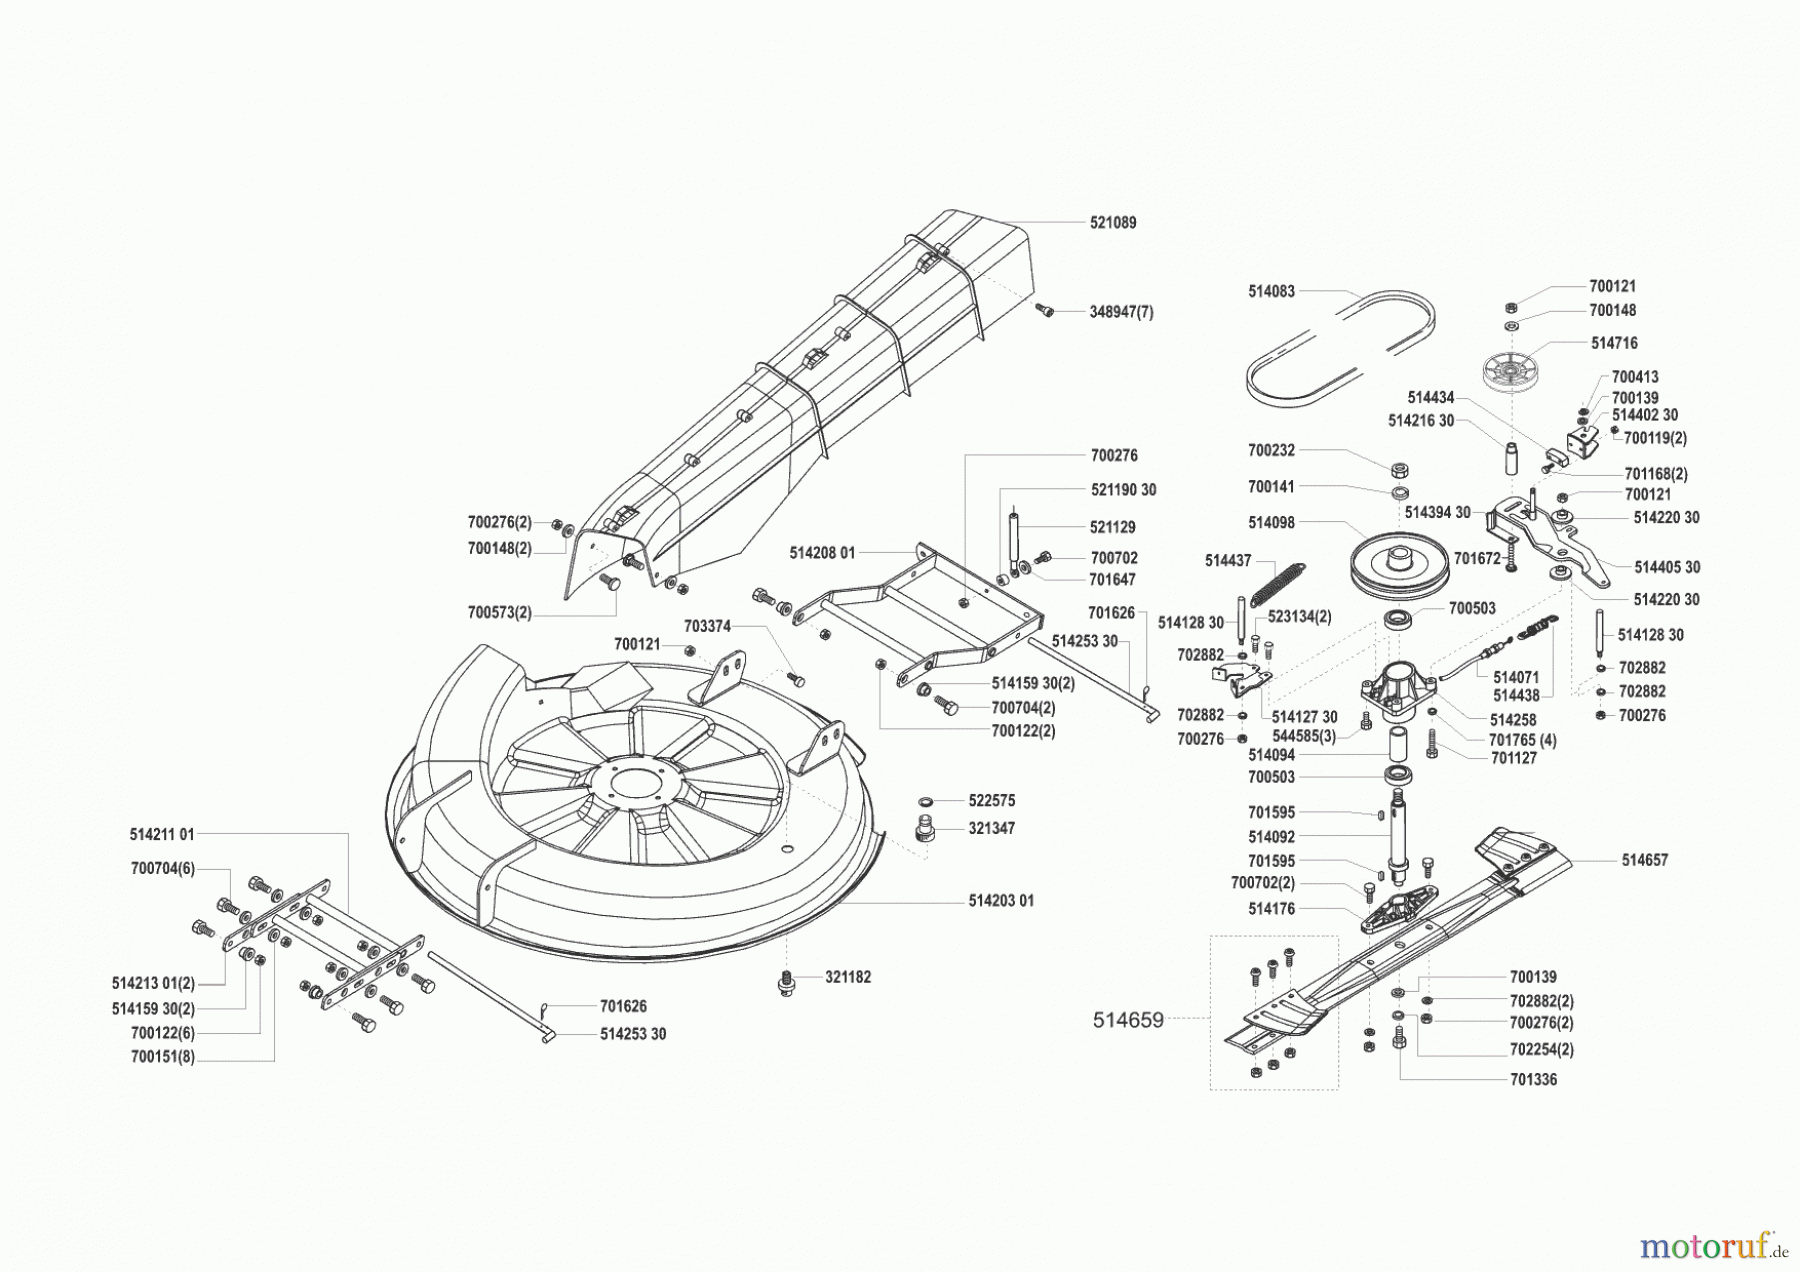  AL-KO Gartentechnik Rasentraktor T-800 10/2000 - 08/2001 Seite 5